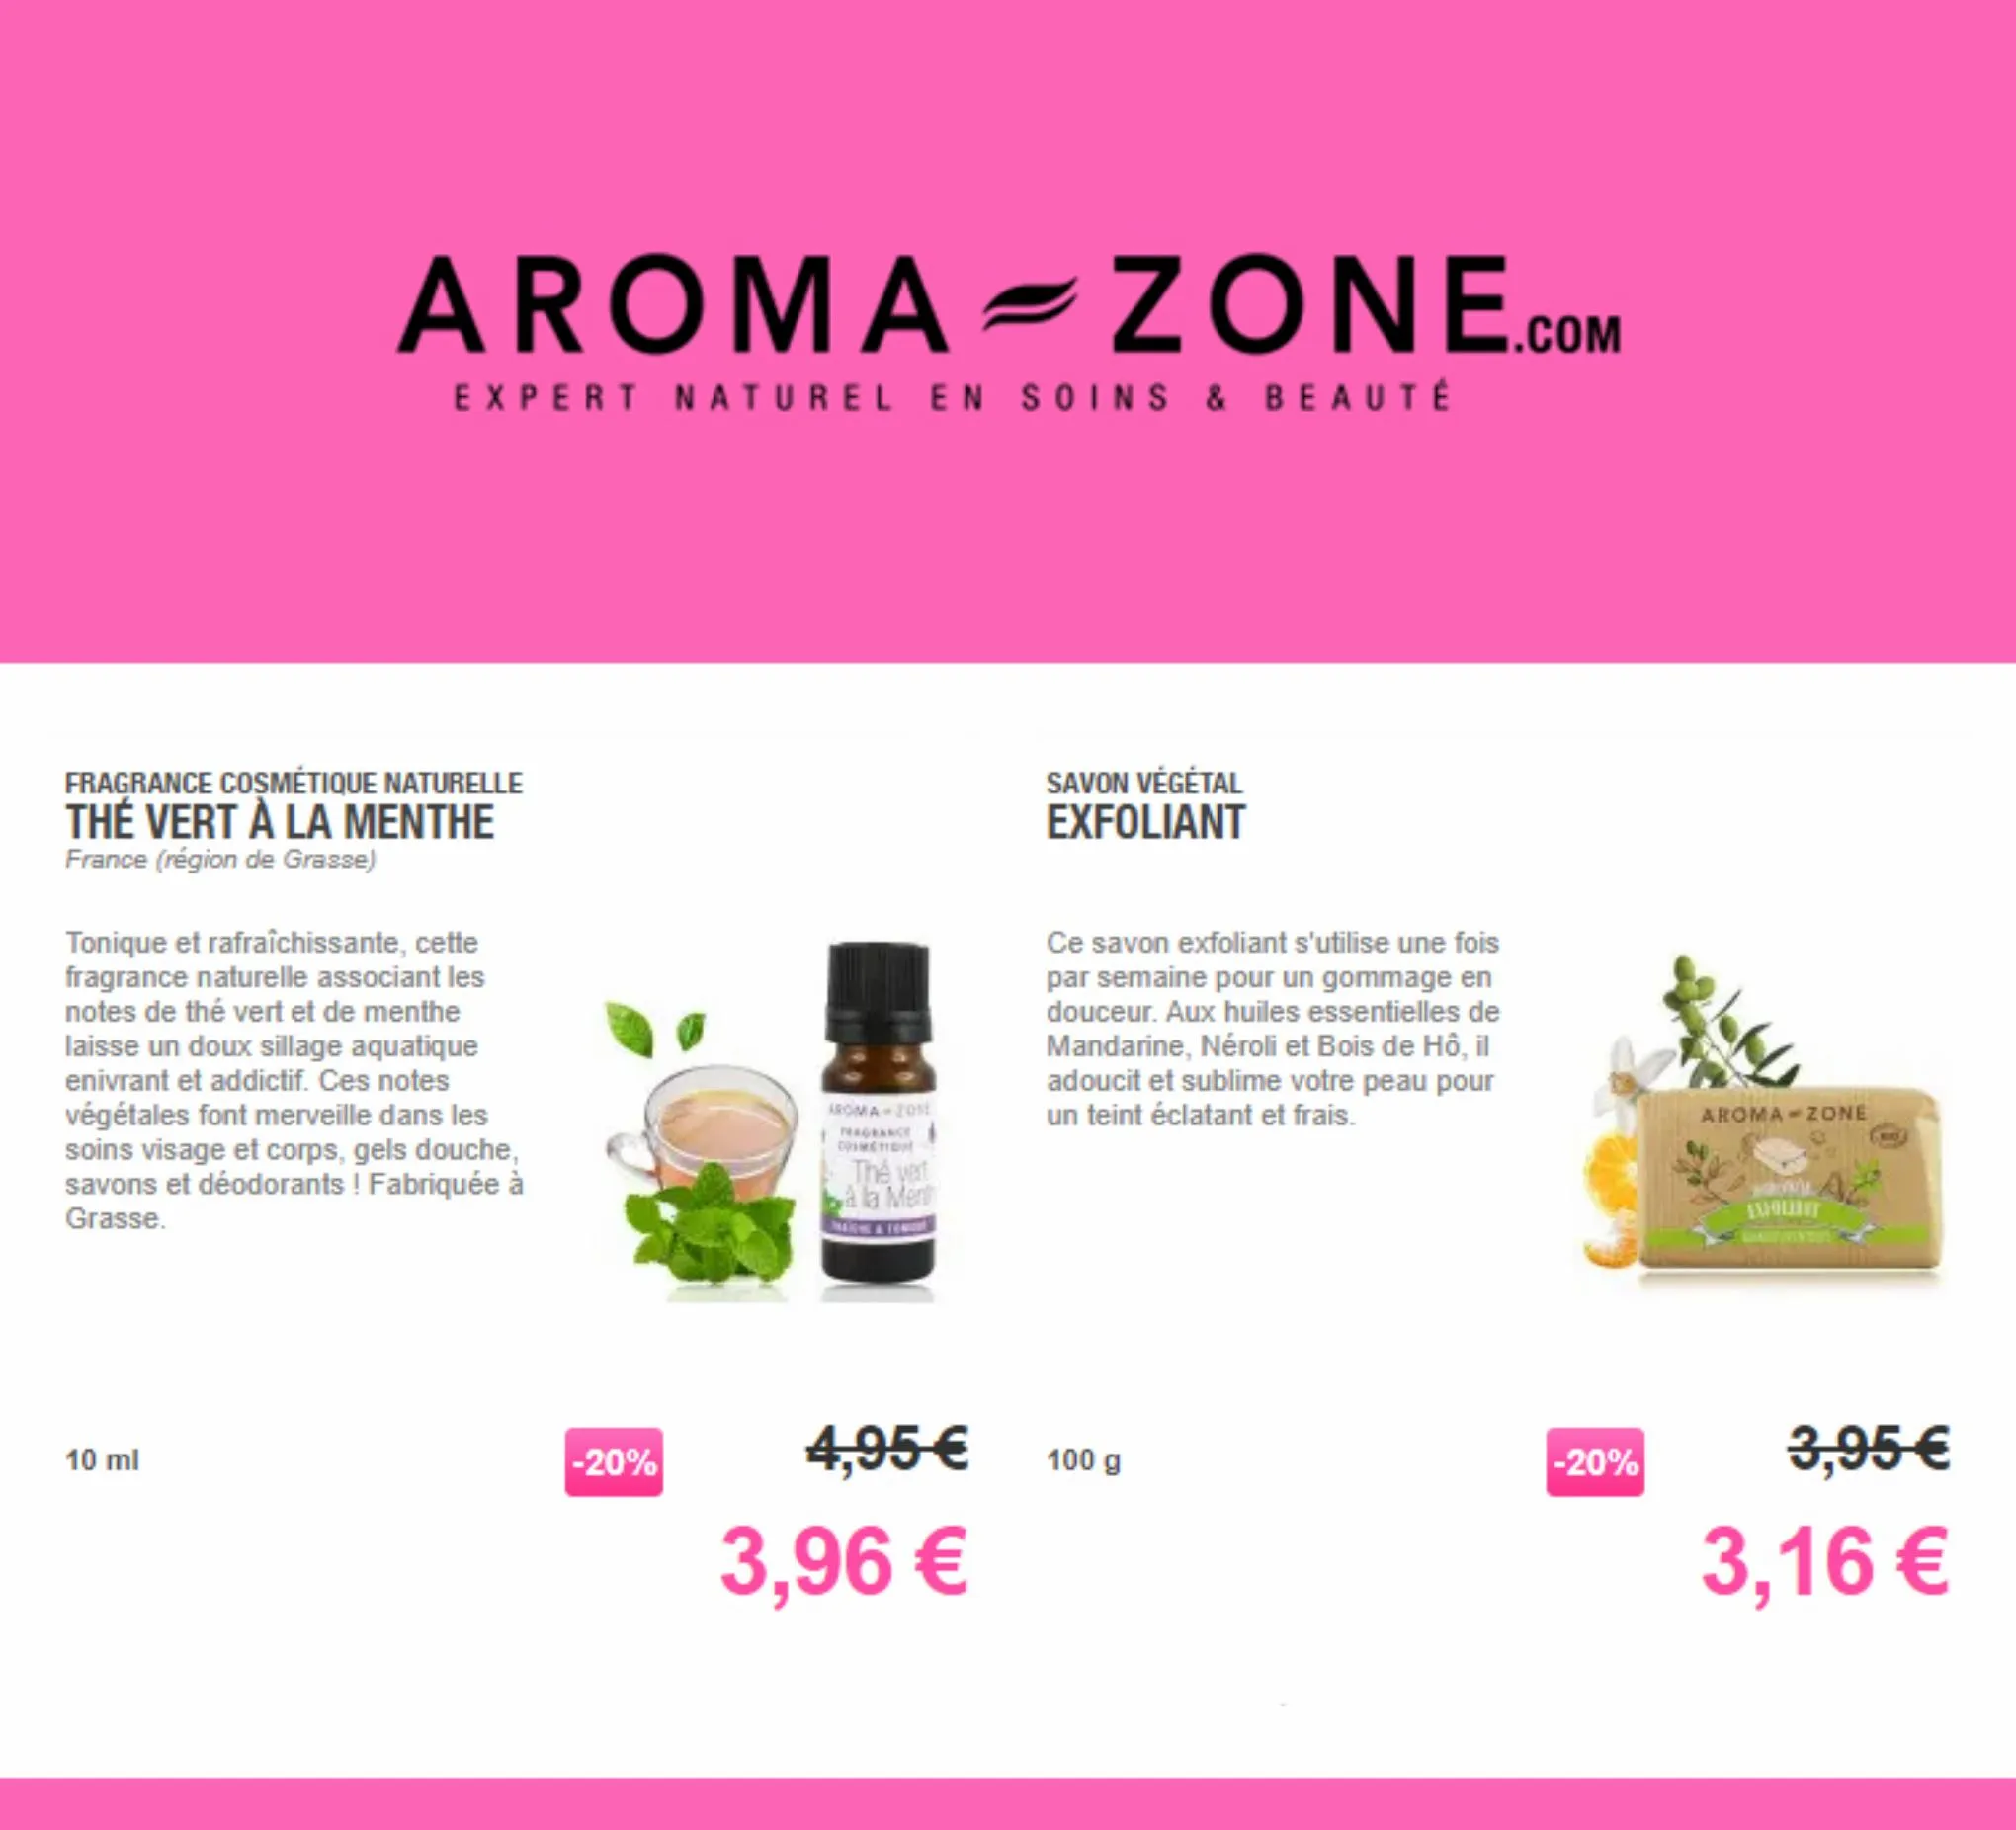 Catalogue Aroma Zone Promos, page 00003